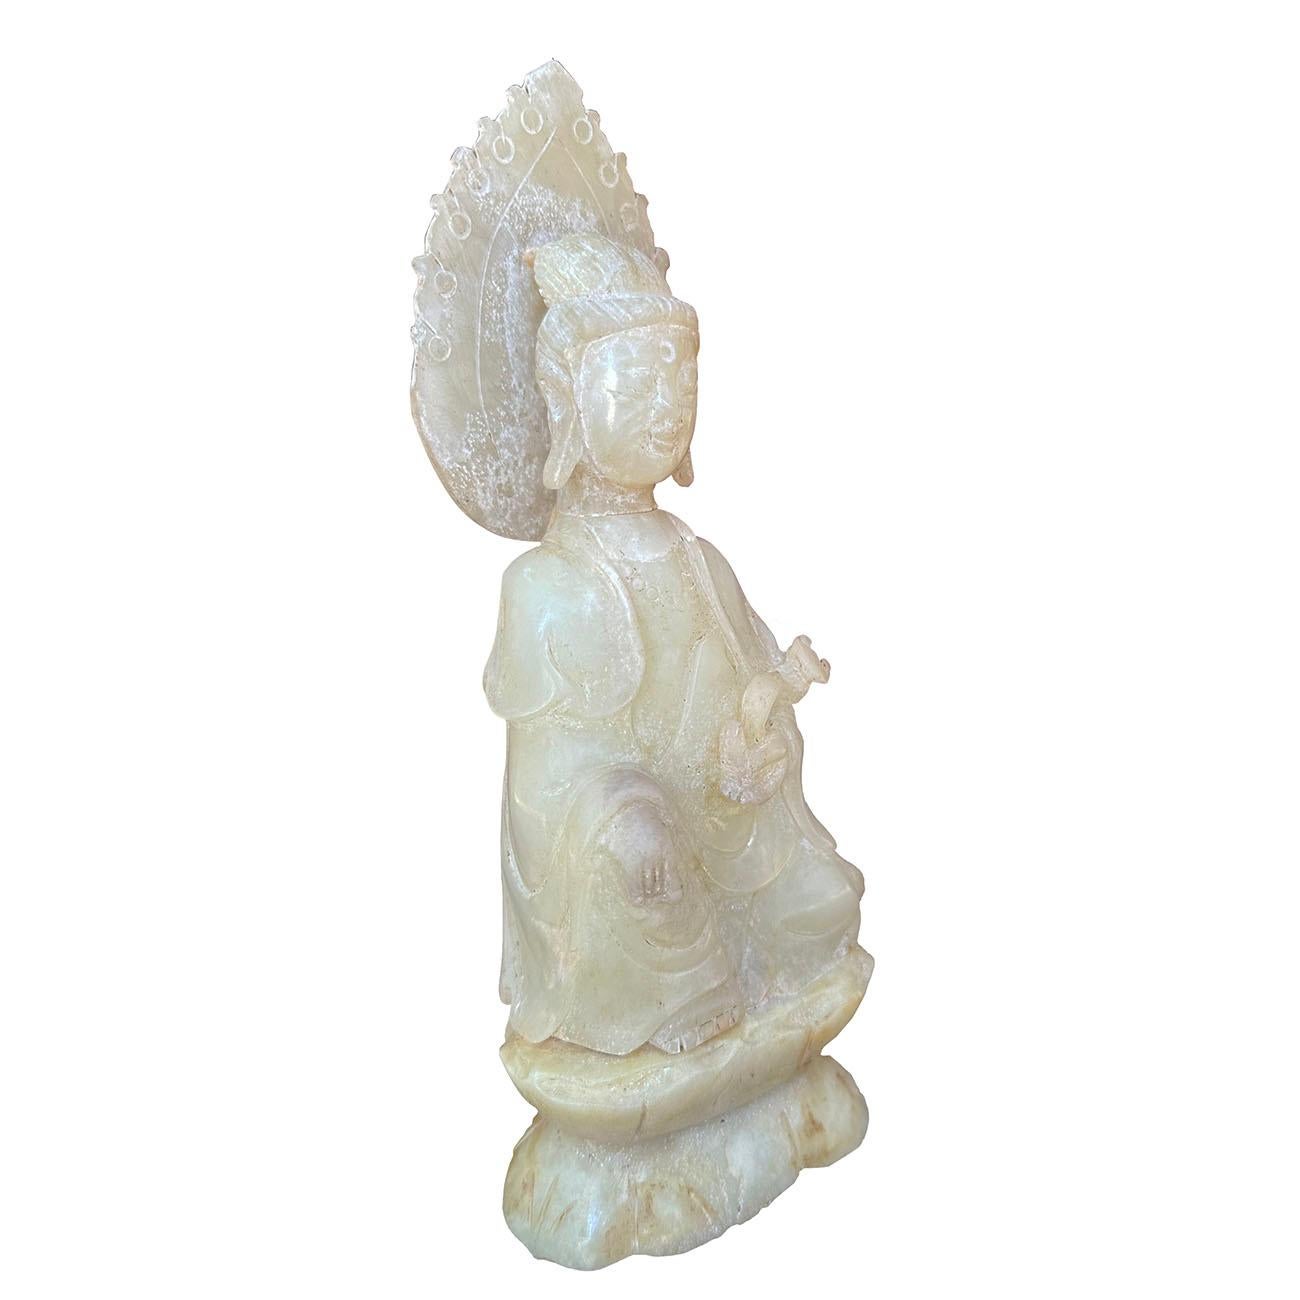 Hand-Carved 20th Century Chinese Jade Carved Kwan Yin Bodhisattva statuary